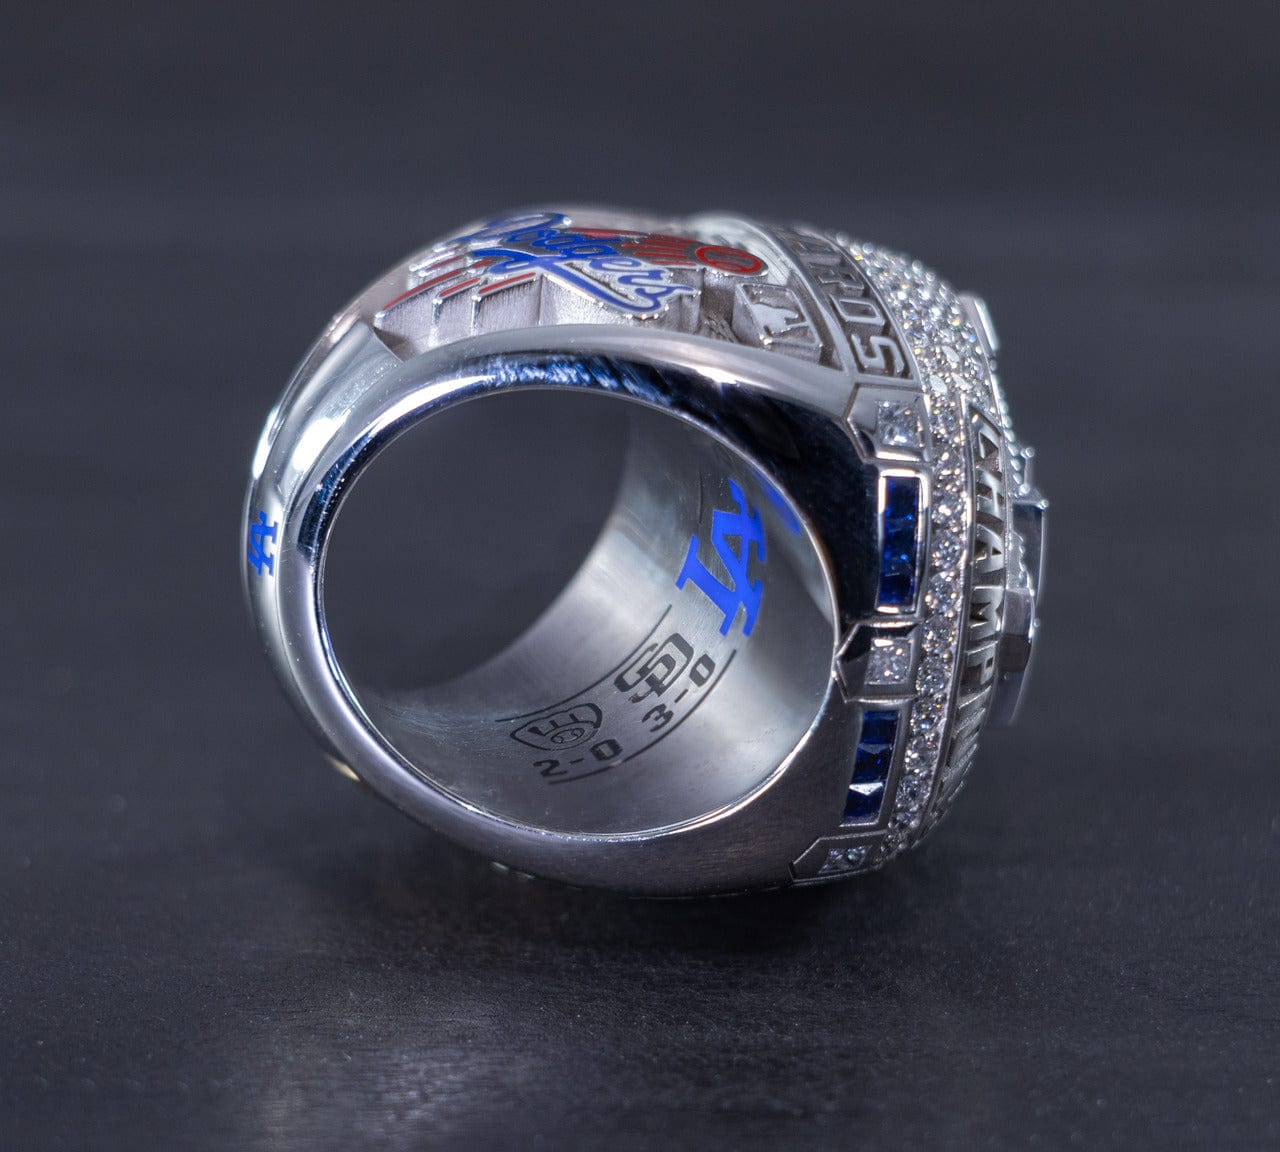 2020 Dodgers Championship Ring Left